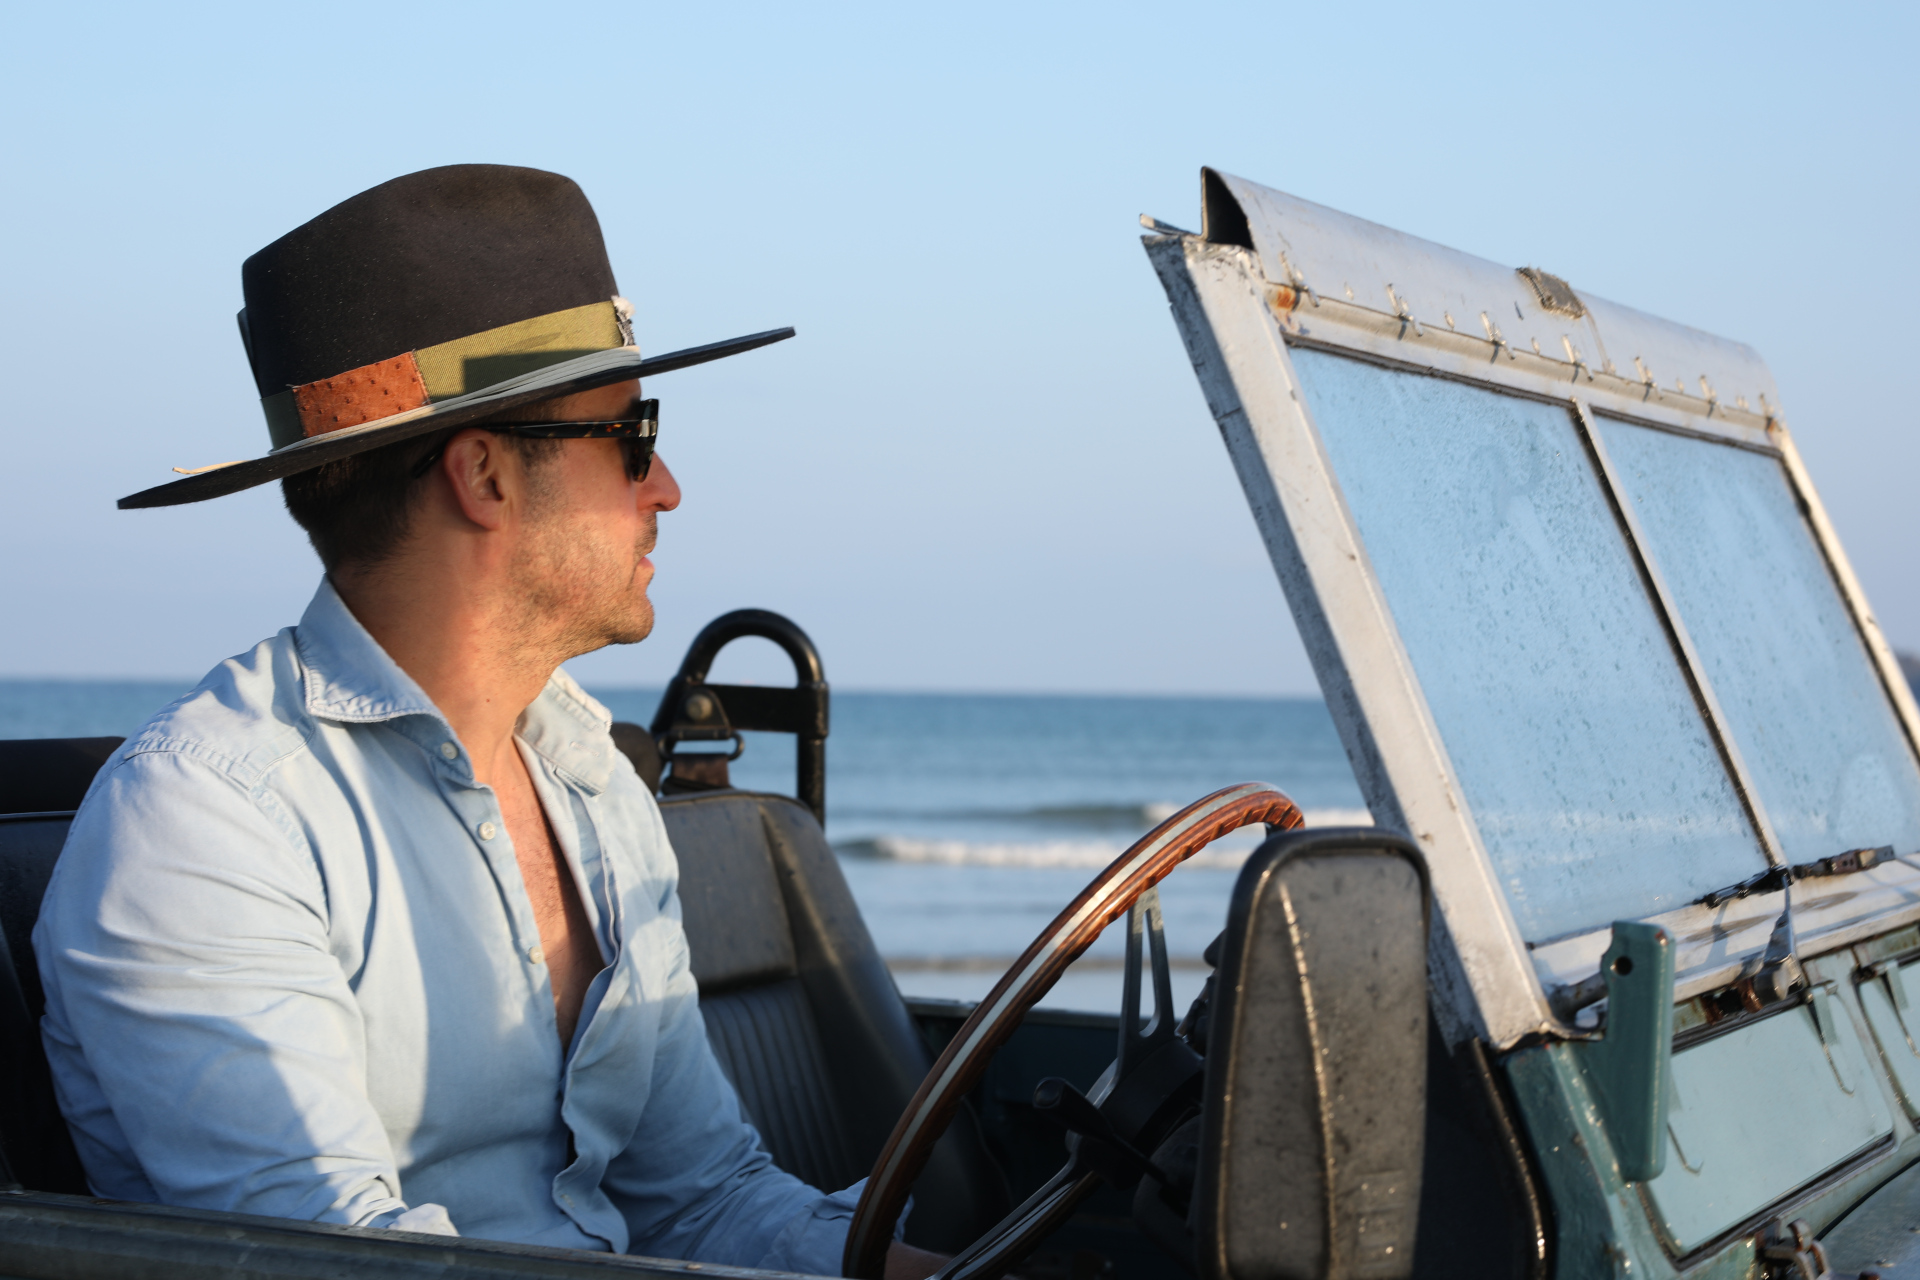 Man sat in car wearing hat, overlooking sea